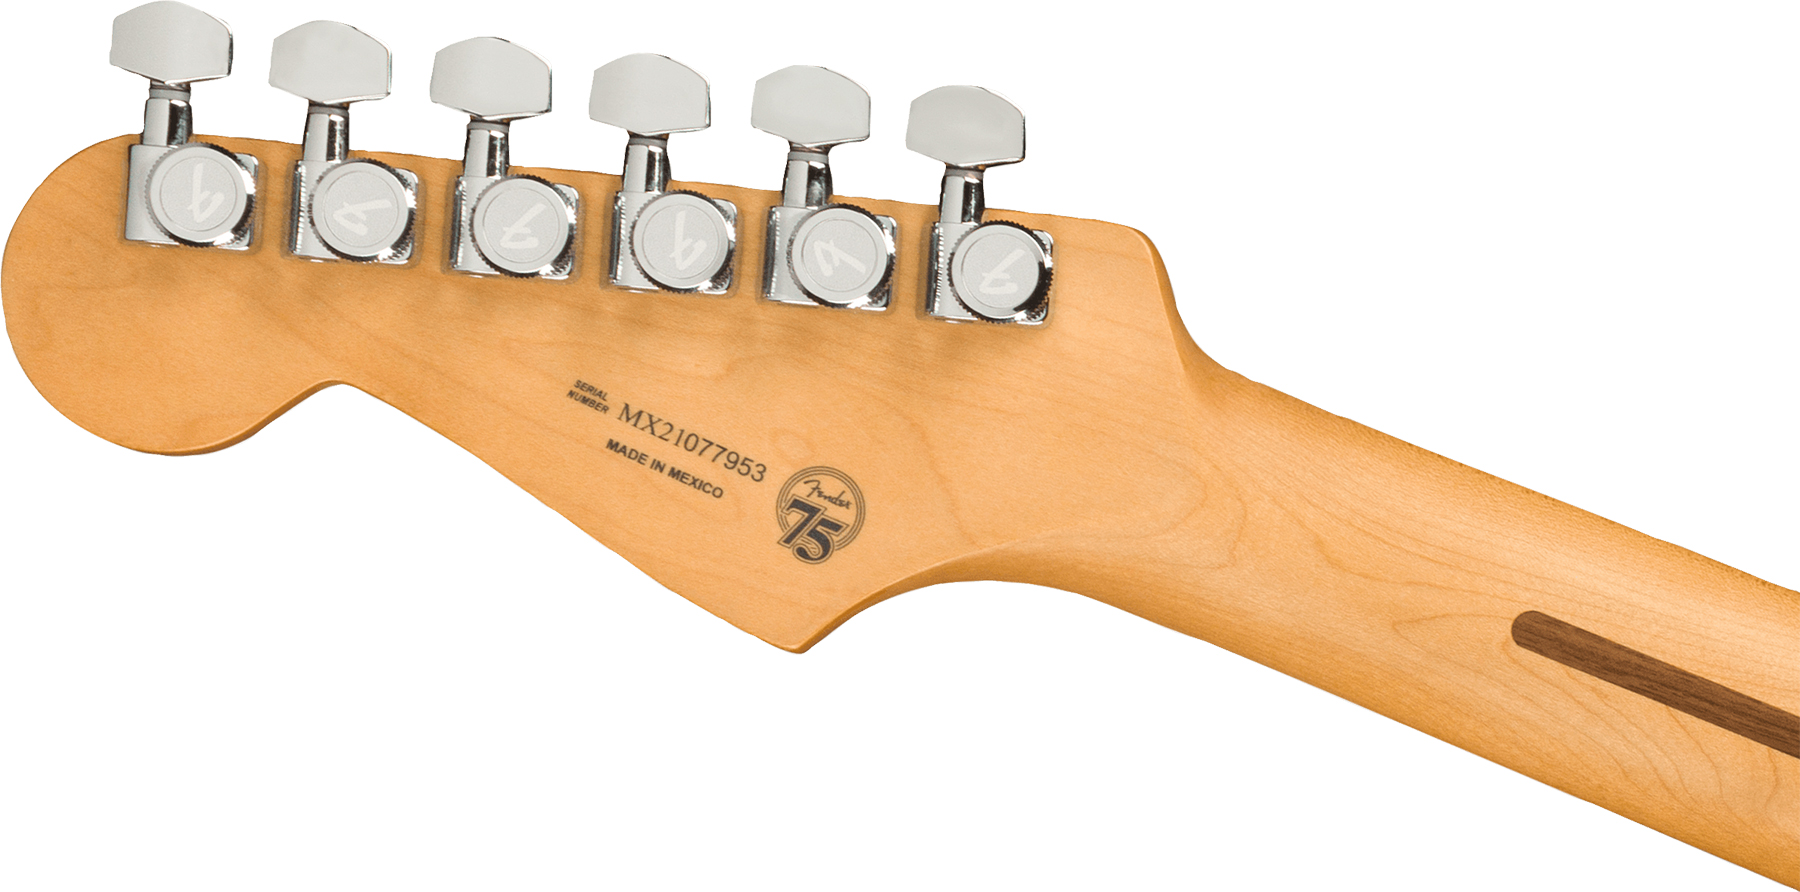 Fender Strat Player Plus Mex Hss Trem Mn - Cosmic Jade - Str shape electric guitar - Variation 3